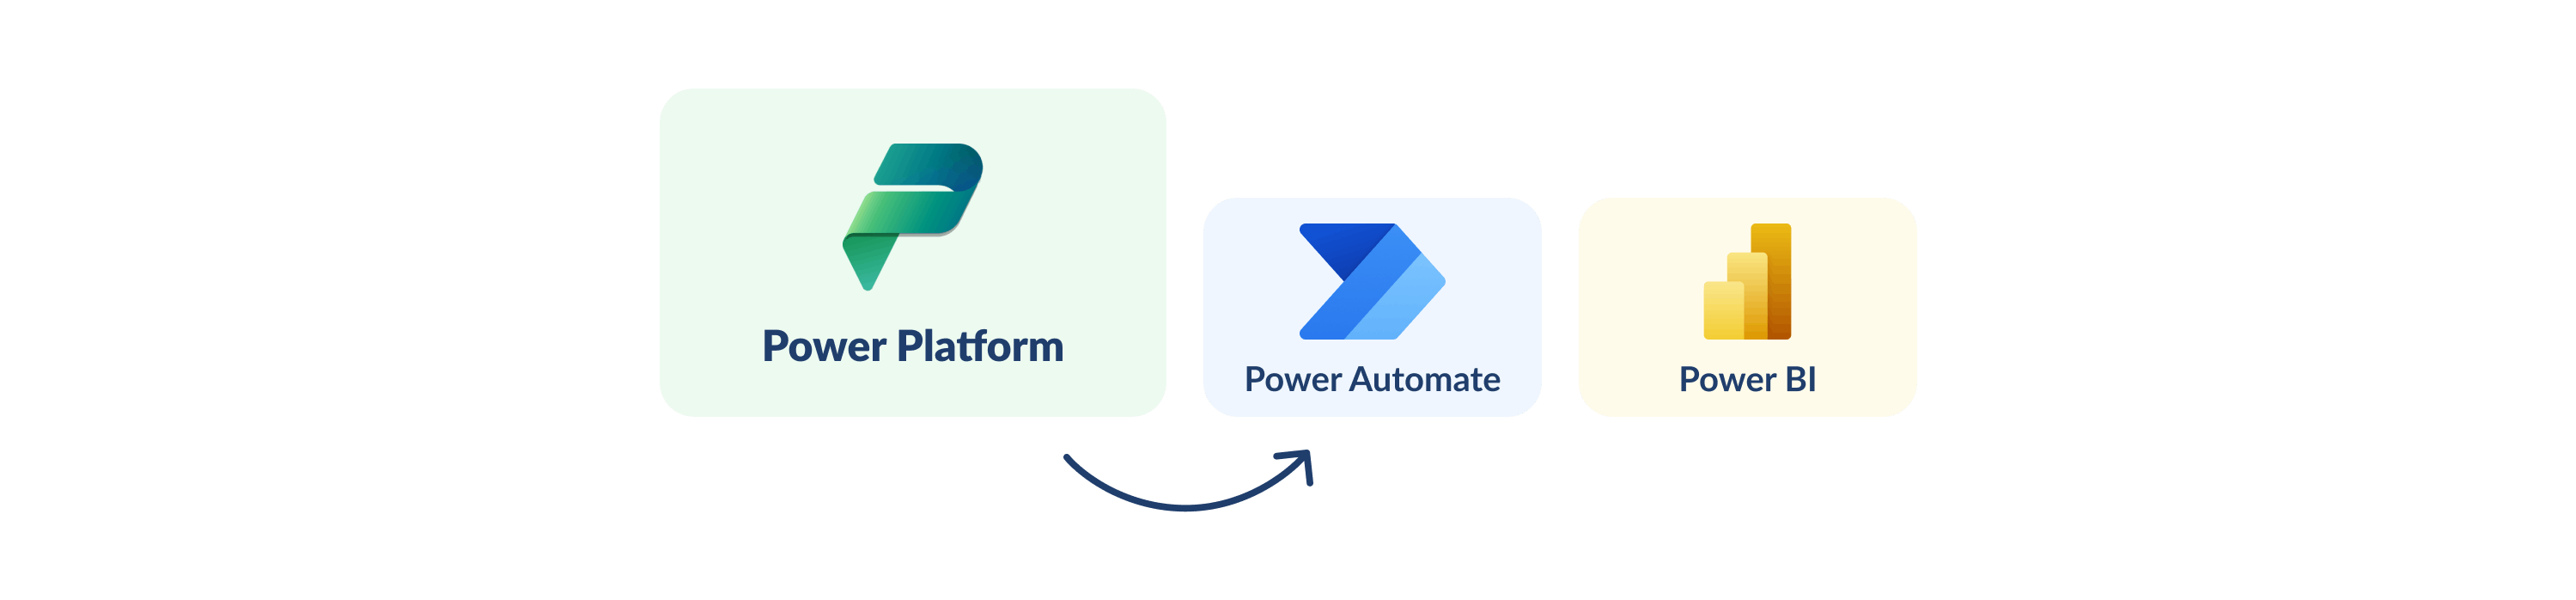 Microsoft Power Platoform